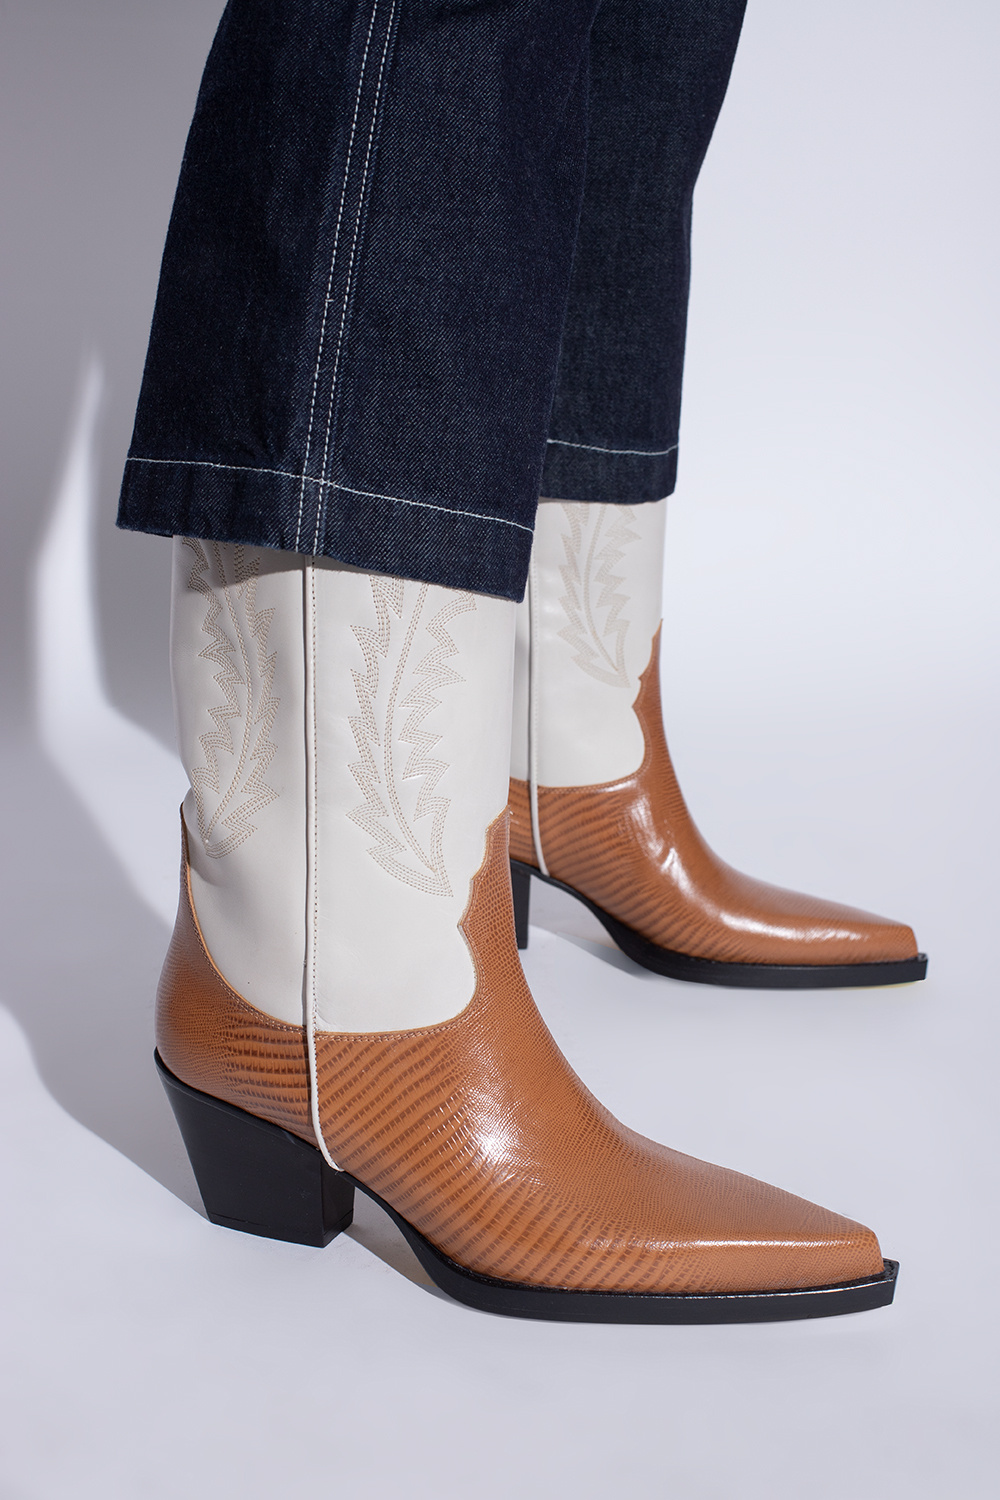 Paris Texas 'El Dorado' leather cowboy boots | Women's Shoes | Vitkac